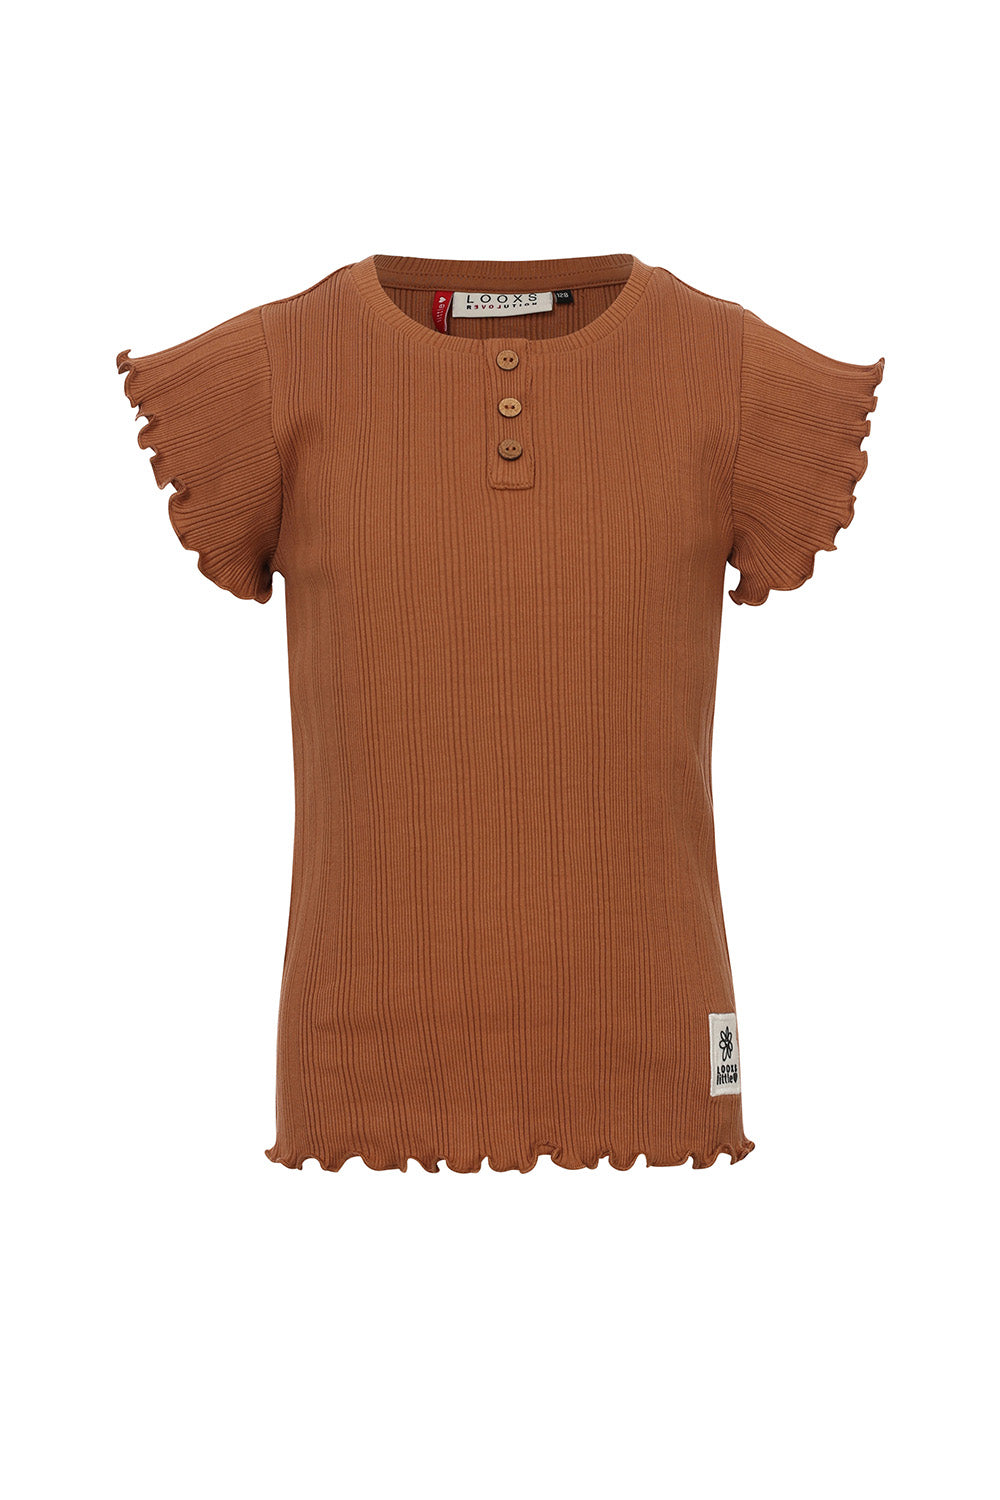 Meisjes Rib T-Shirt van LOOXS Little in de kleur Caramel in maat 128.